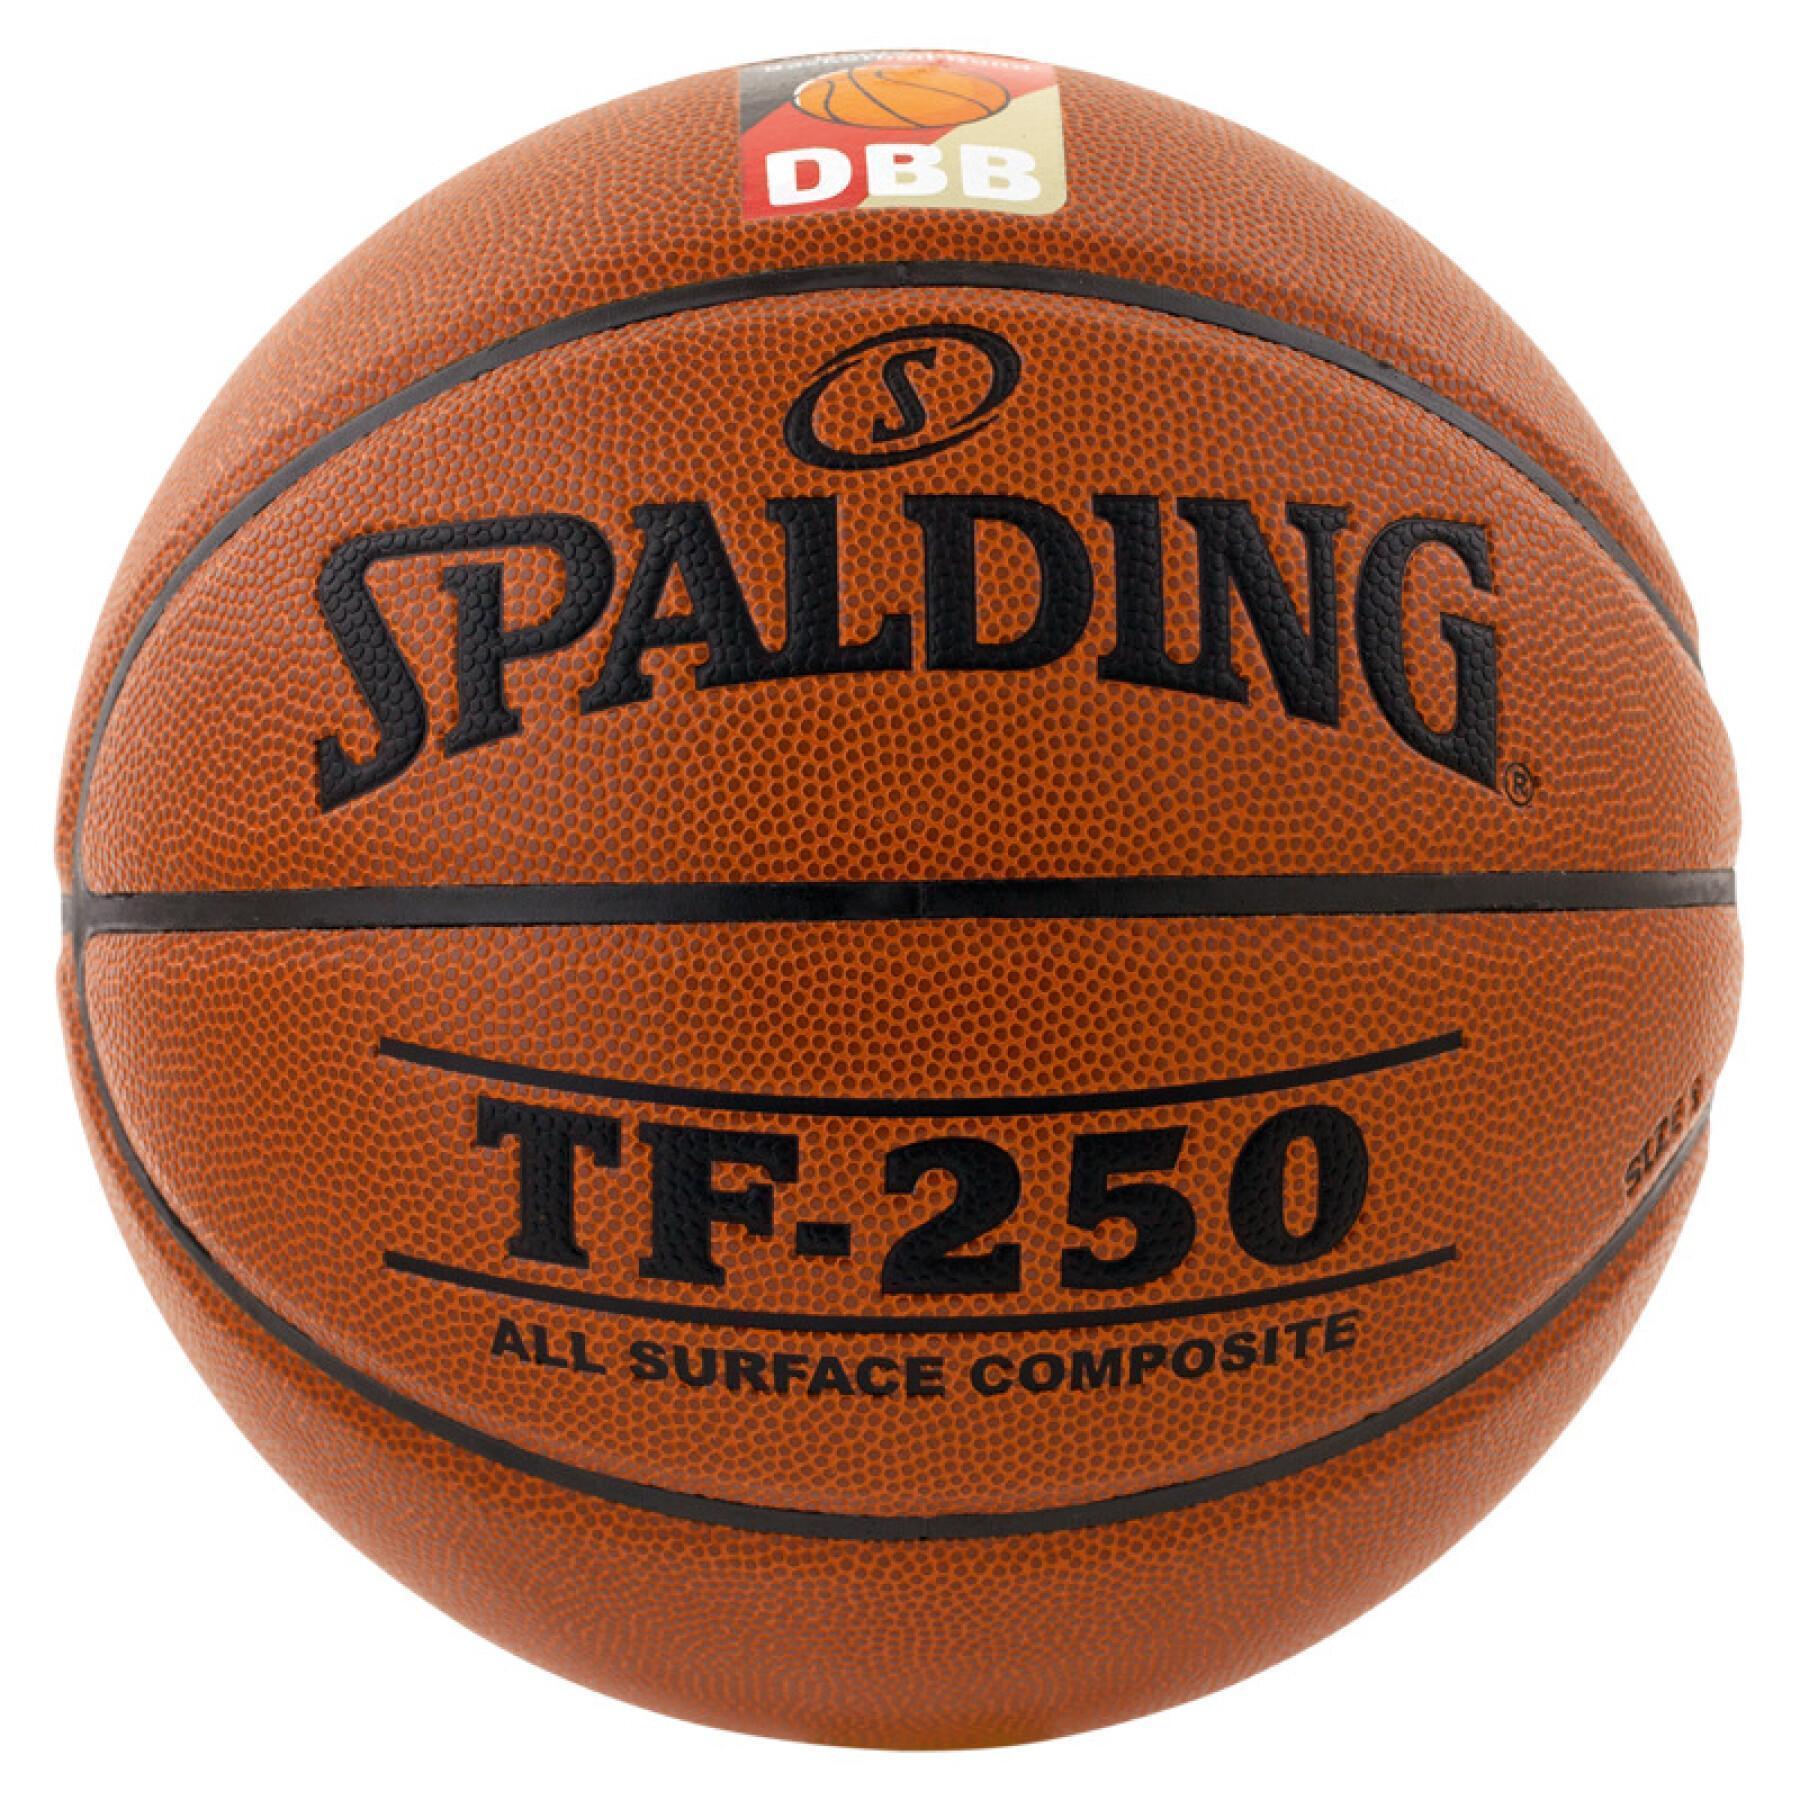 Balon Spalding DBB Tf250 (74-594z)